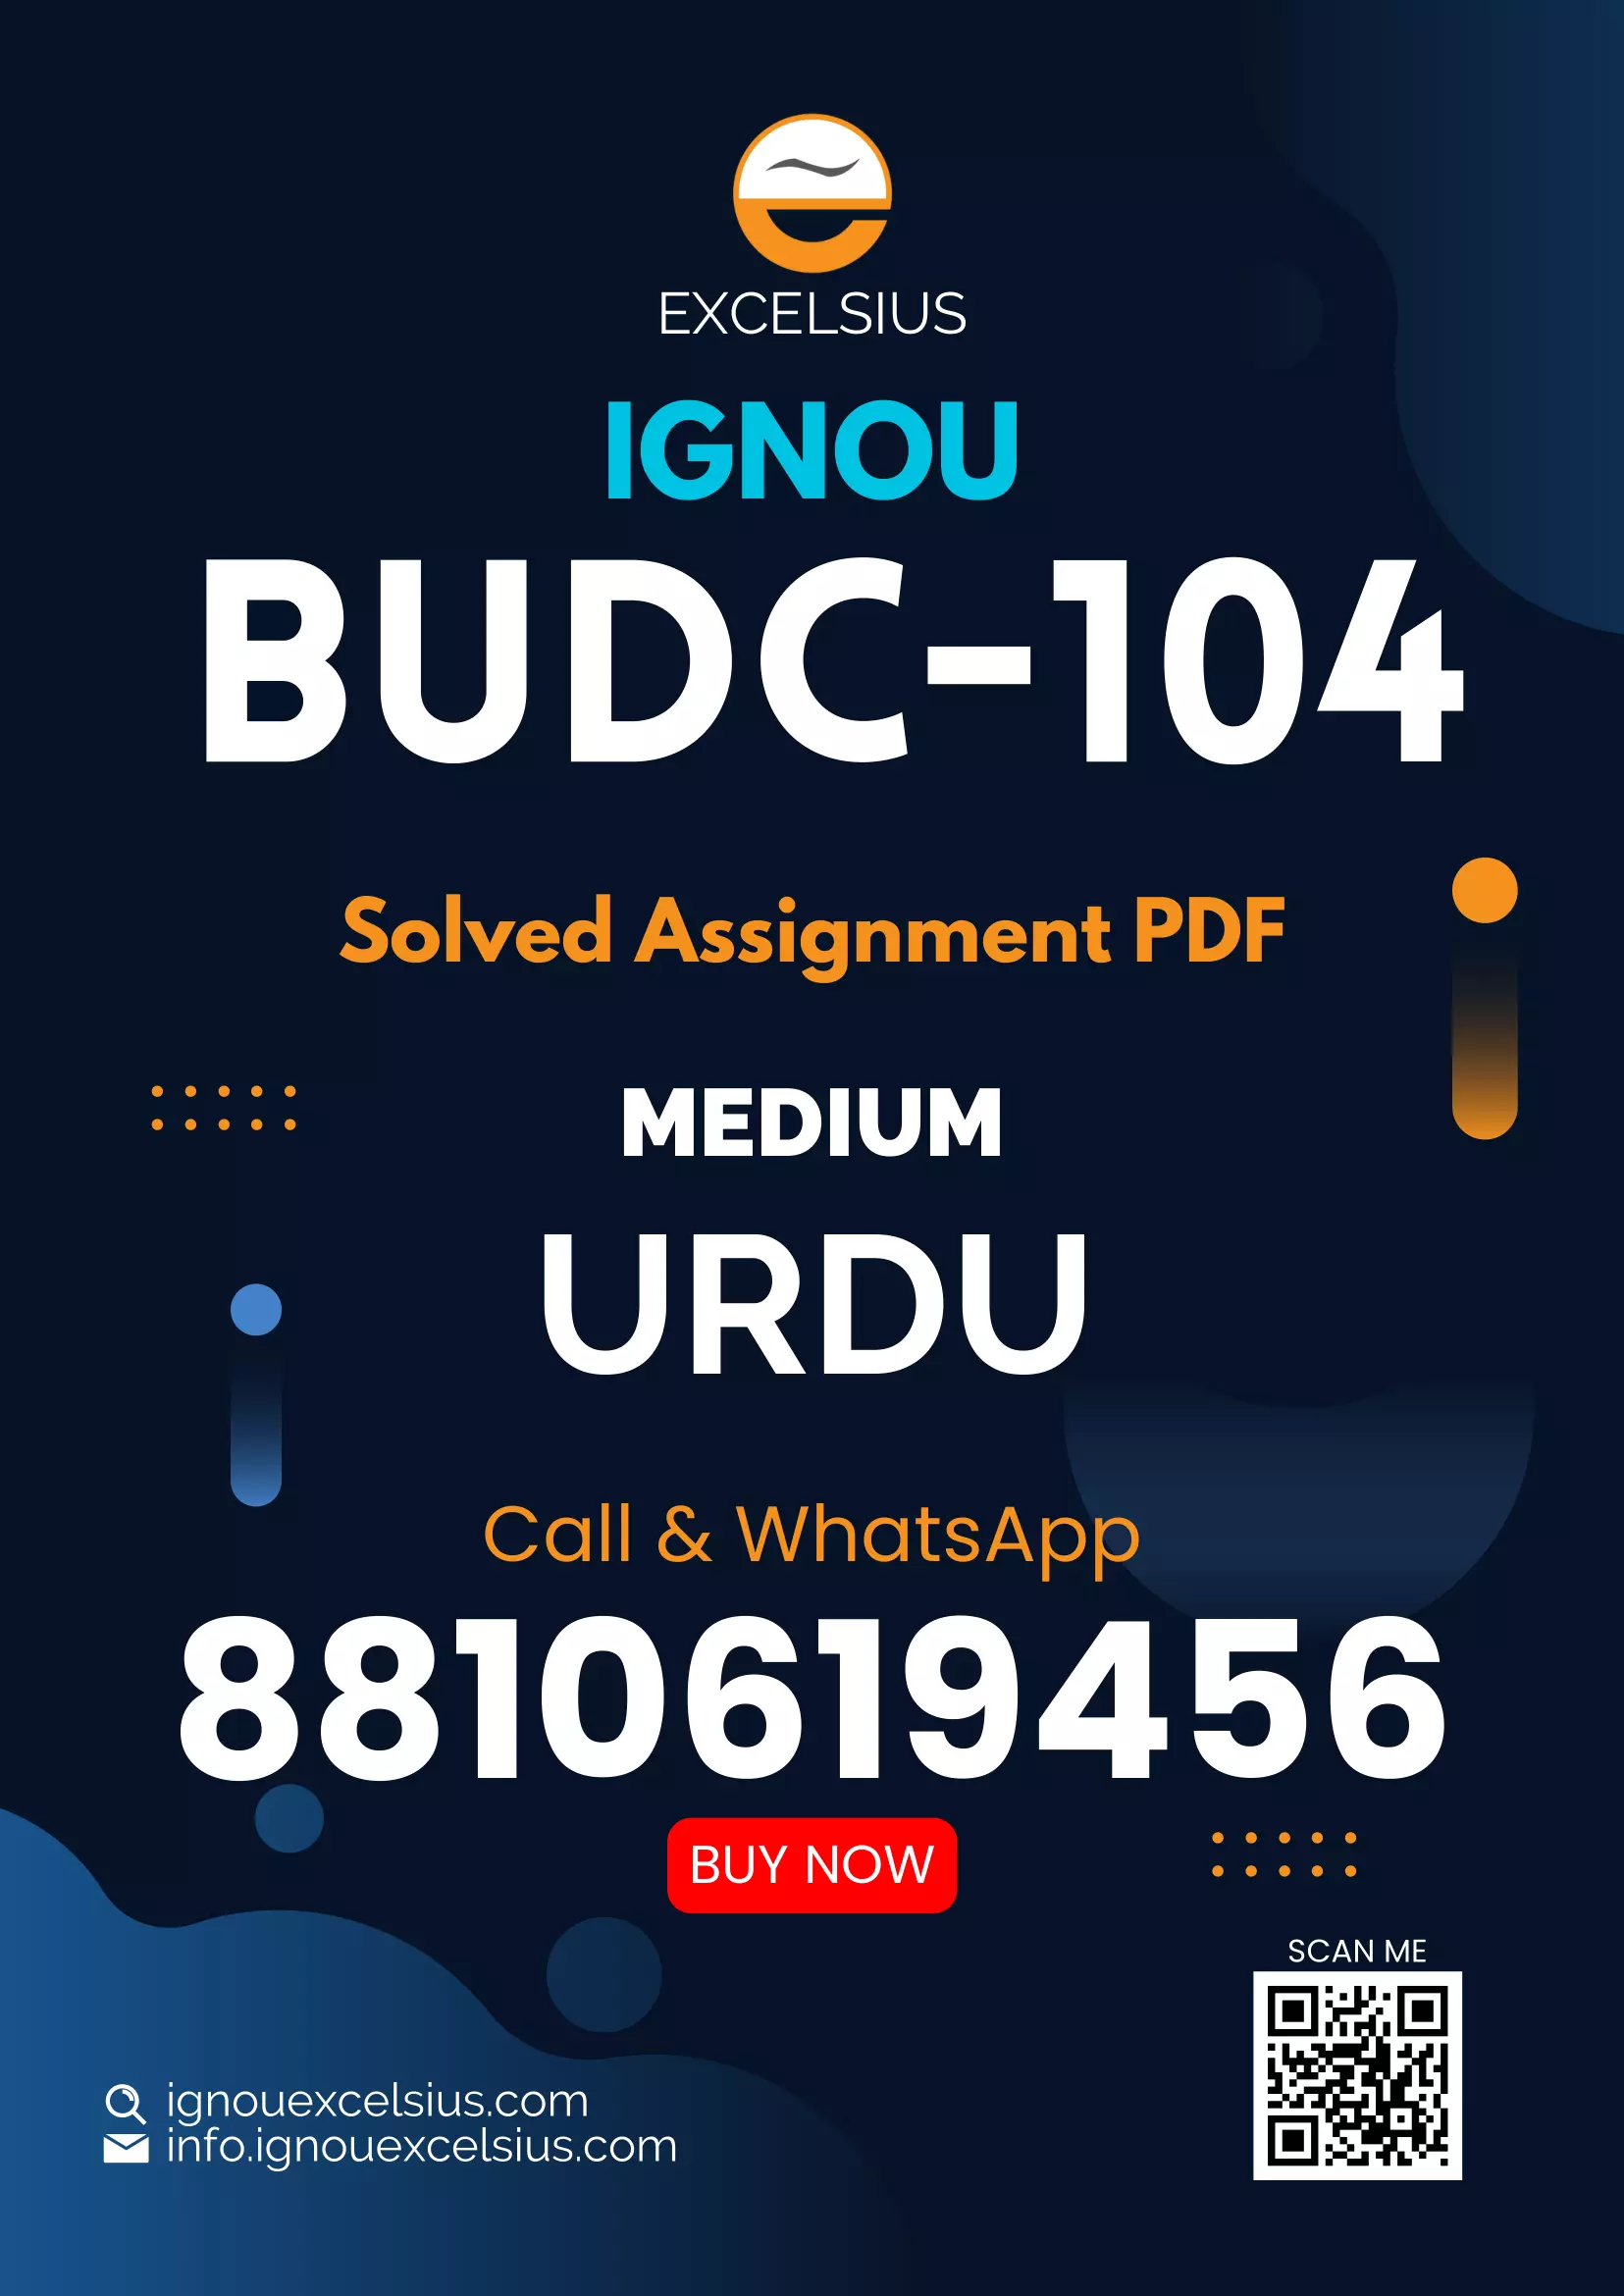 IGNOU BUDC-104 - Study of Modern Urdu Ghazal Latest Solved Assignment-July 2022 - January 2023